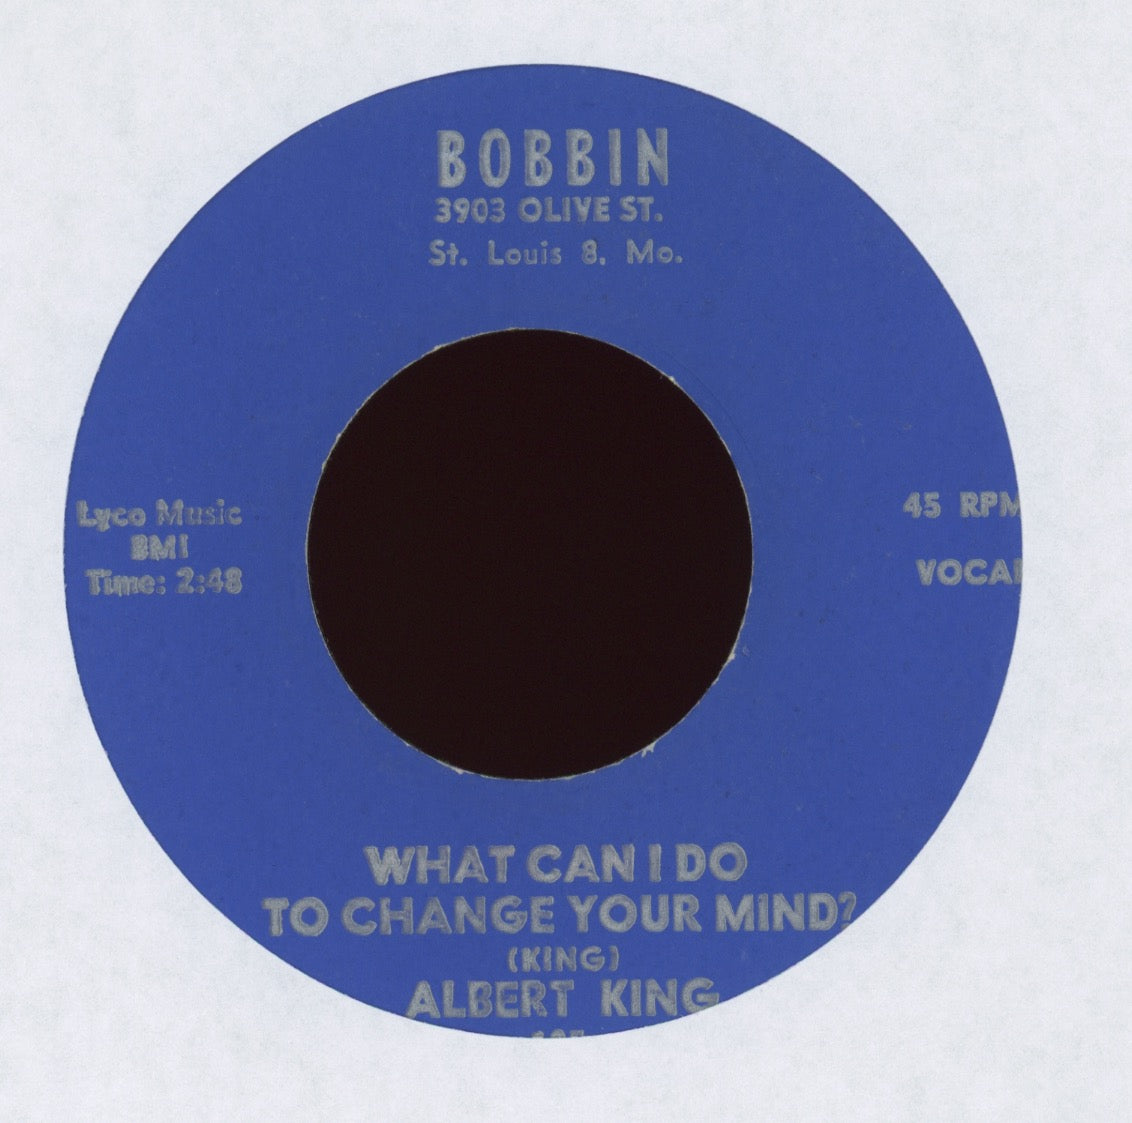 Albert King - I Get Evil on Bobbin